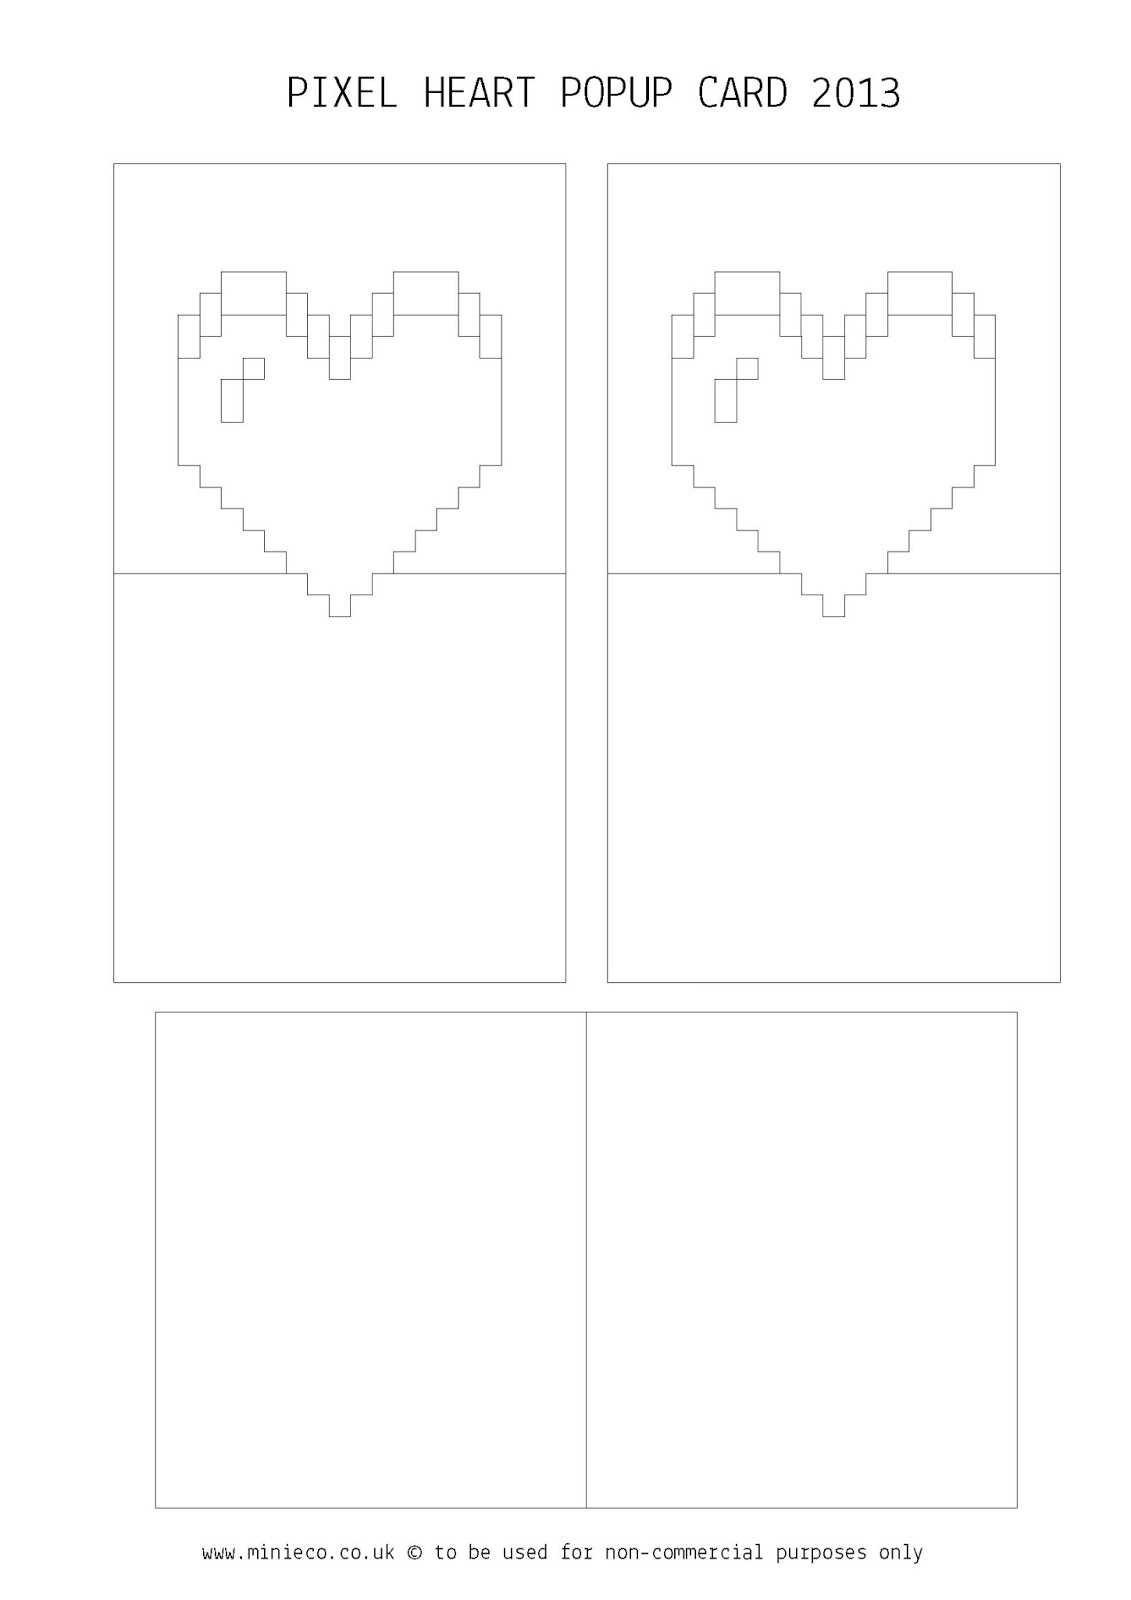 Pixel Heart Pop Up Card Template ] - Day Pixel Heart Pop Up Intended For Pixel Heart Pop Up Card Template